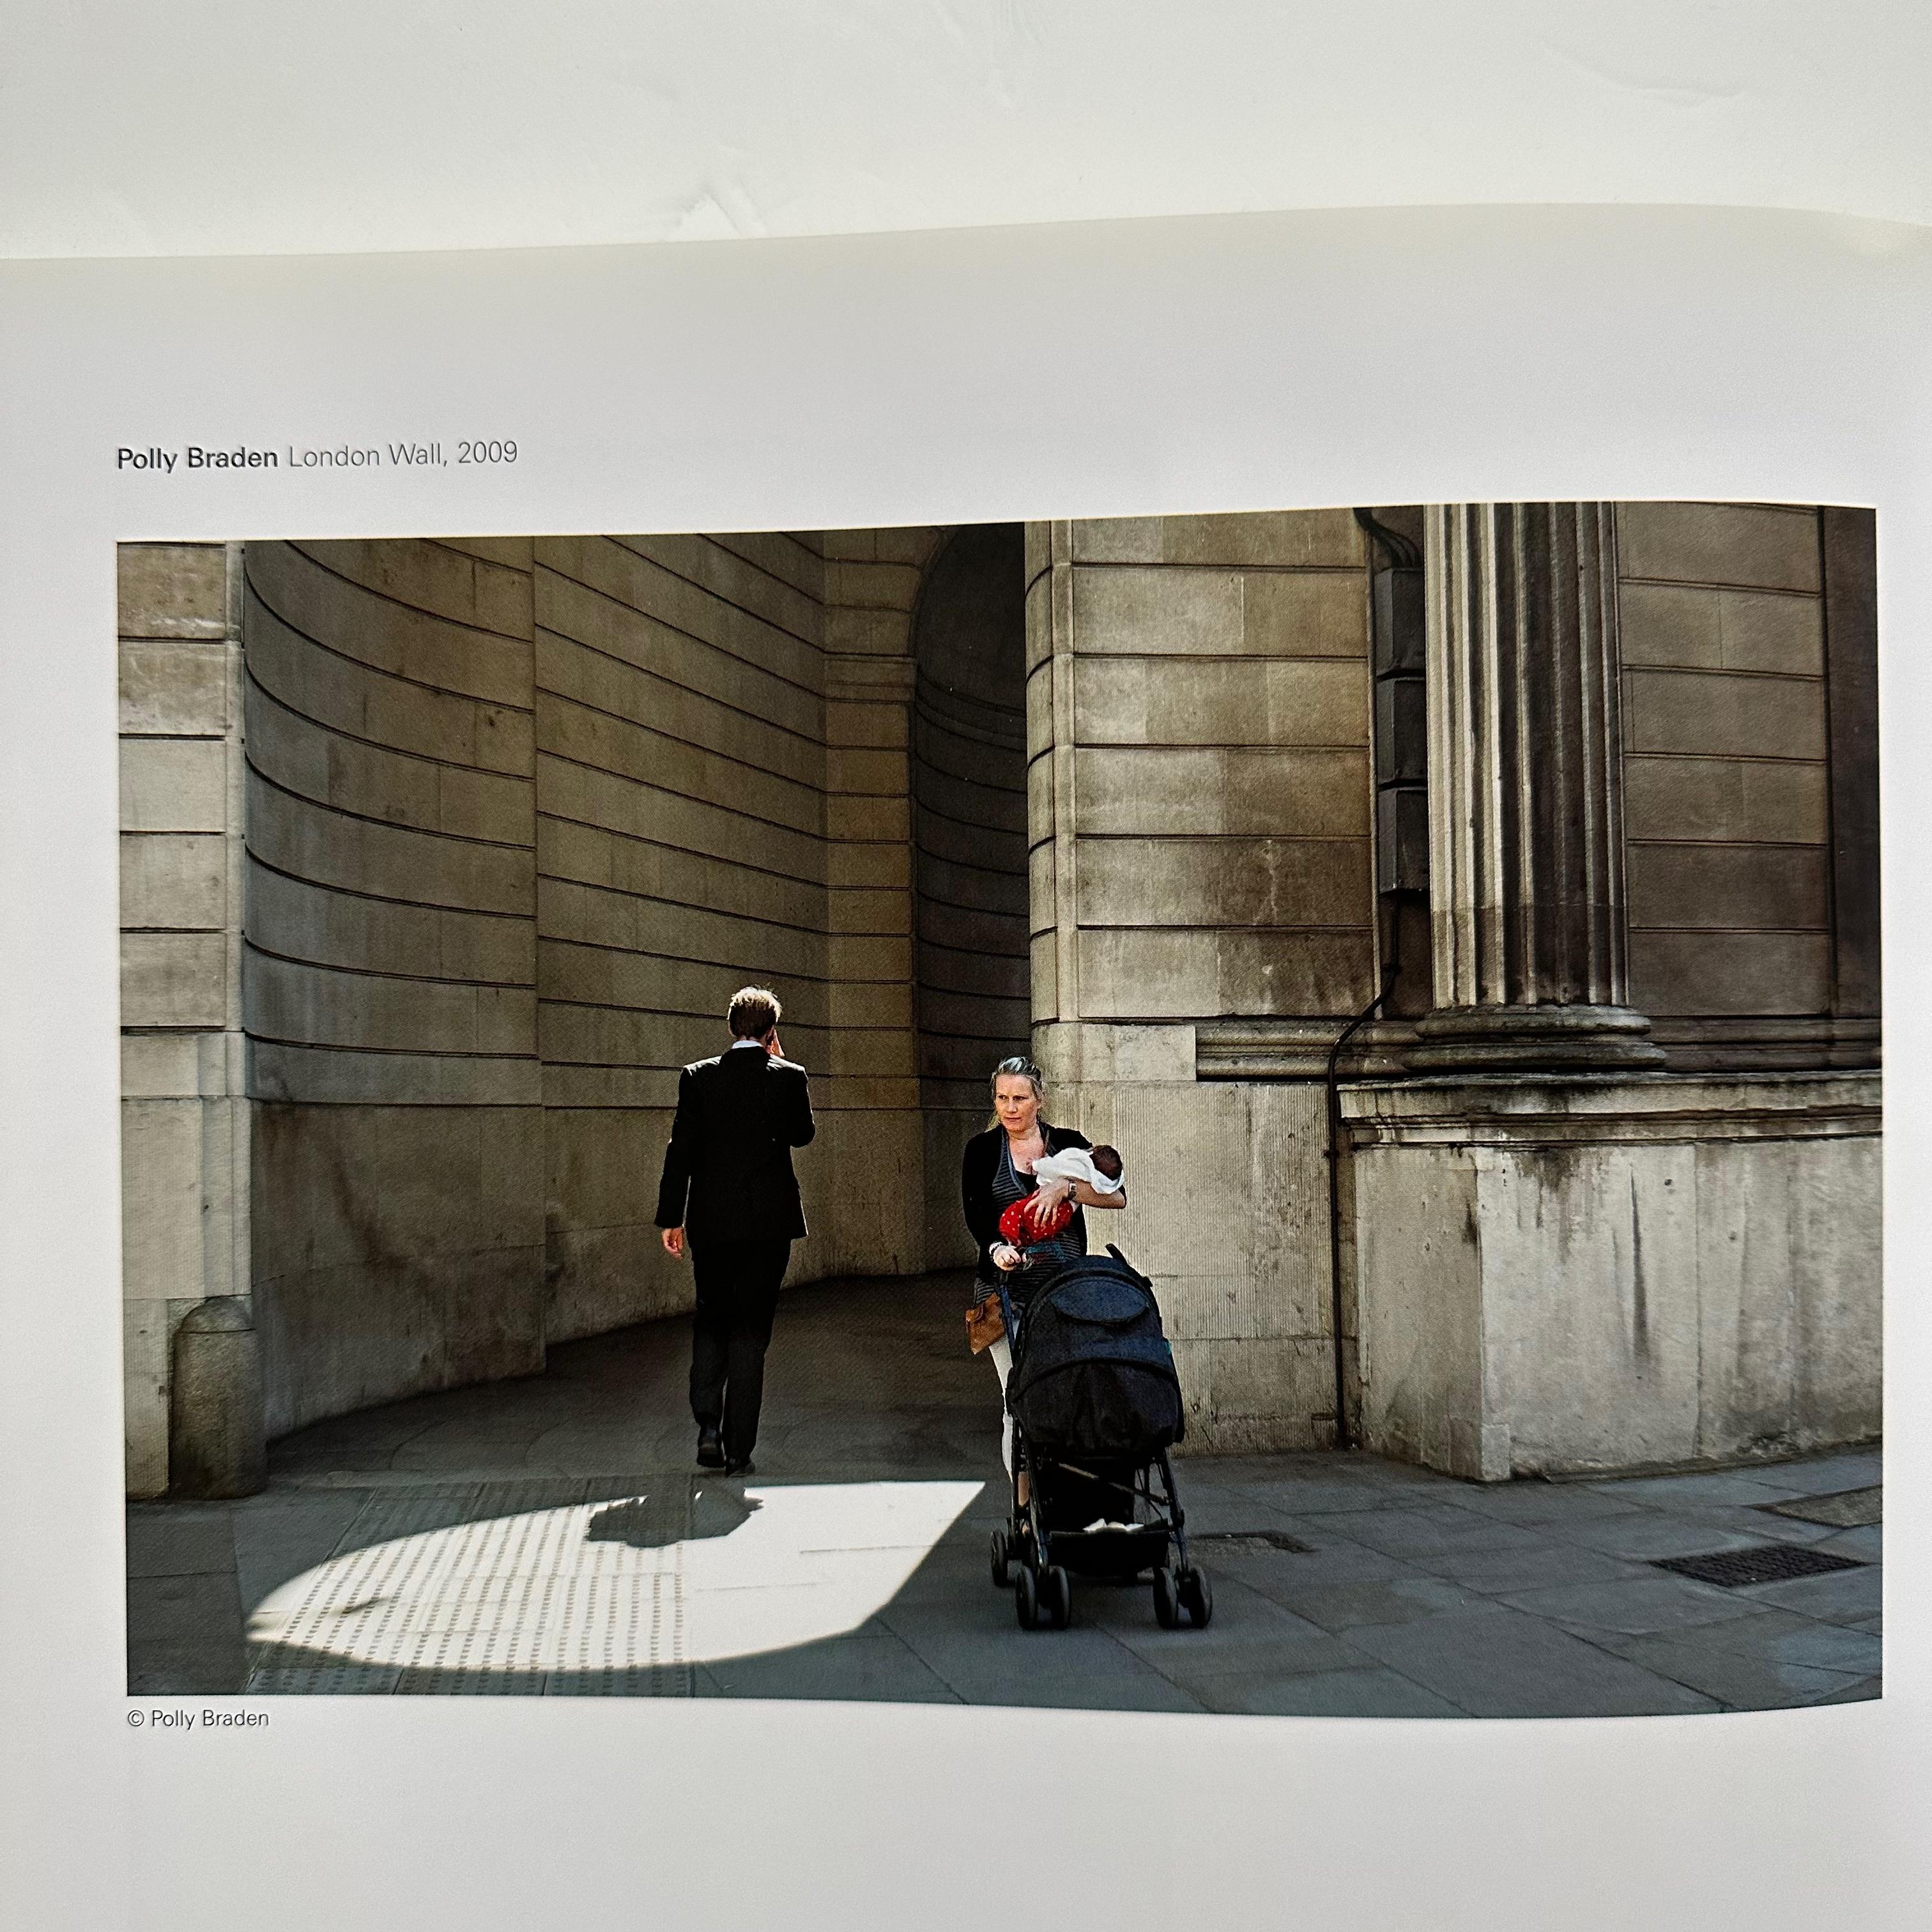 Contemporary London Street Photography 1860-2010 - Mike Seaborne & Anna Sparham - 2012